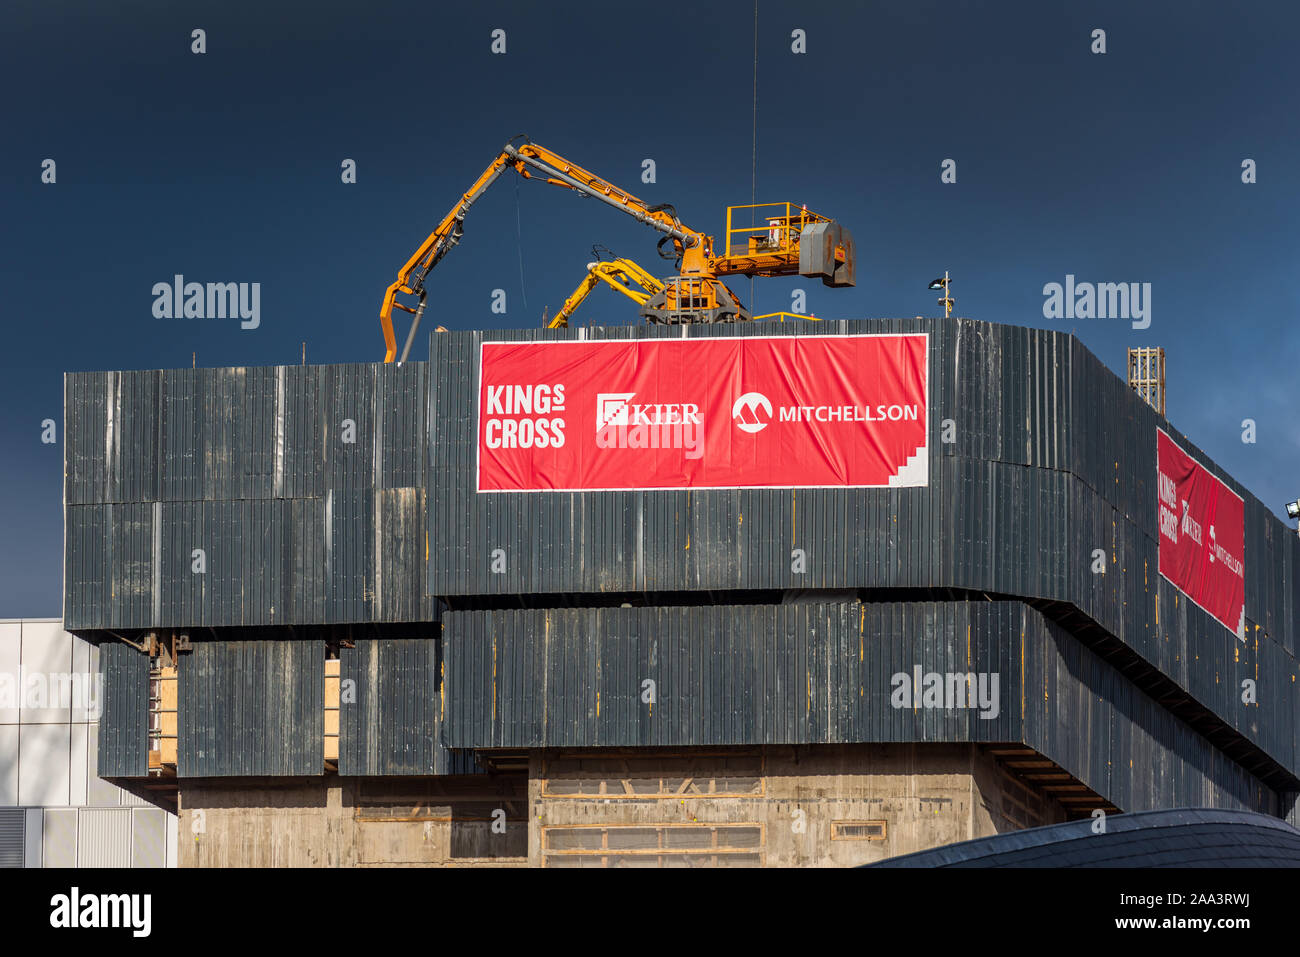 Kier Group plc and Mitchellson Formwork & Civil Engineering Ltd building construction in London's Kings Cross Stock Photo